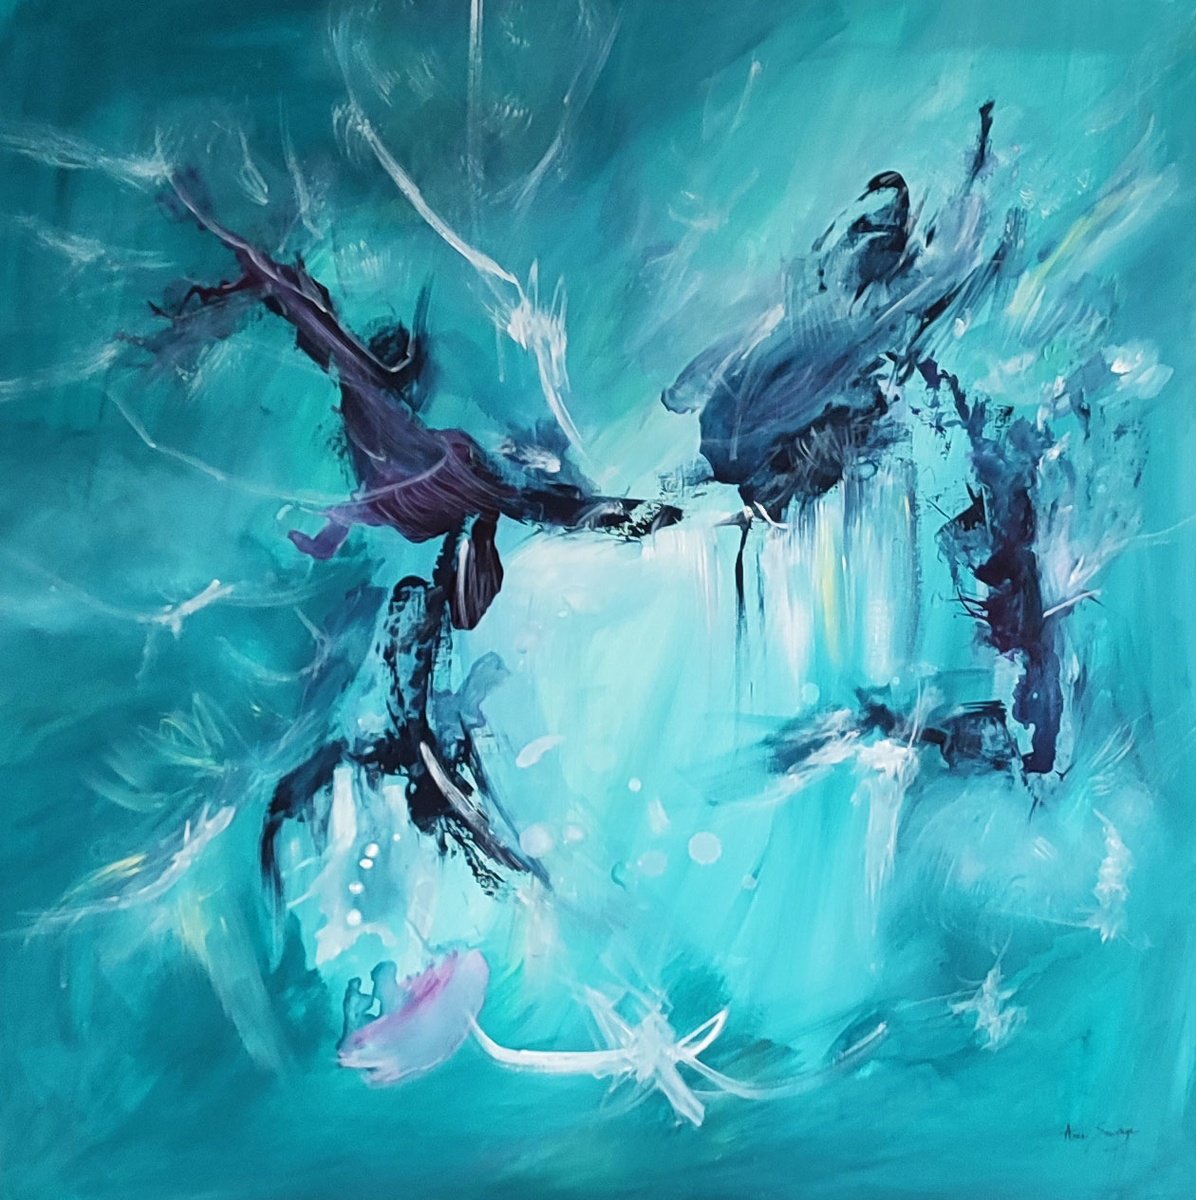 Danse aquatique by AME SAUVAGE